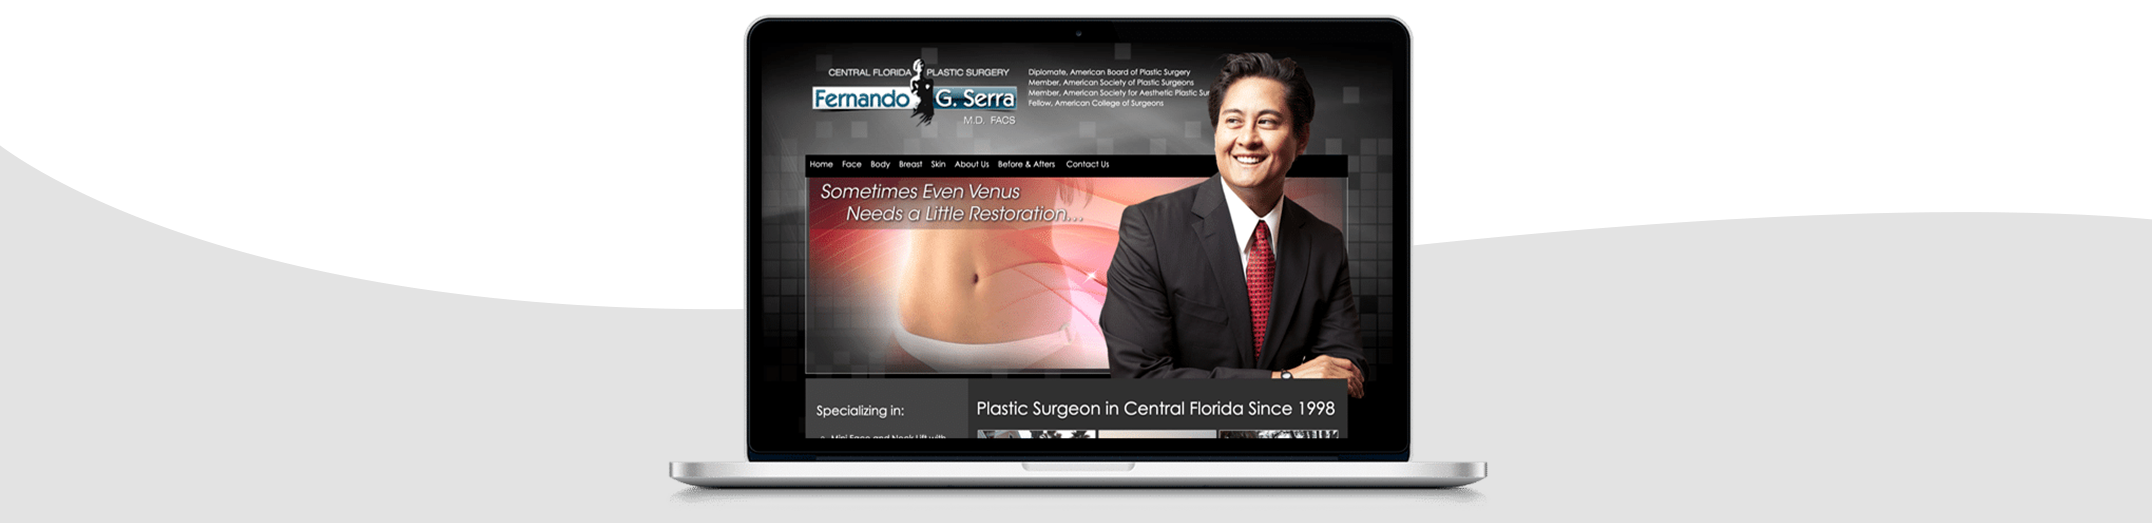 SEO Case Study | Central Florida Plastic Surgery